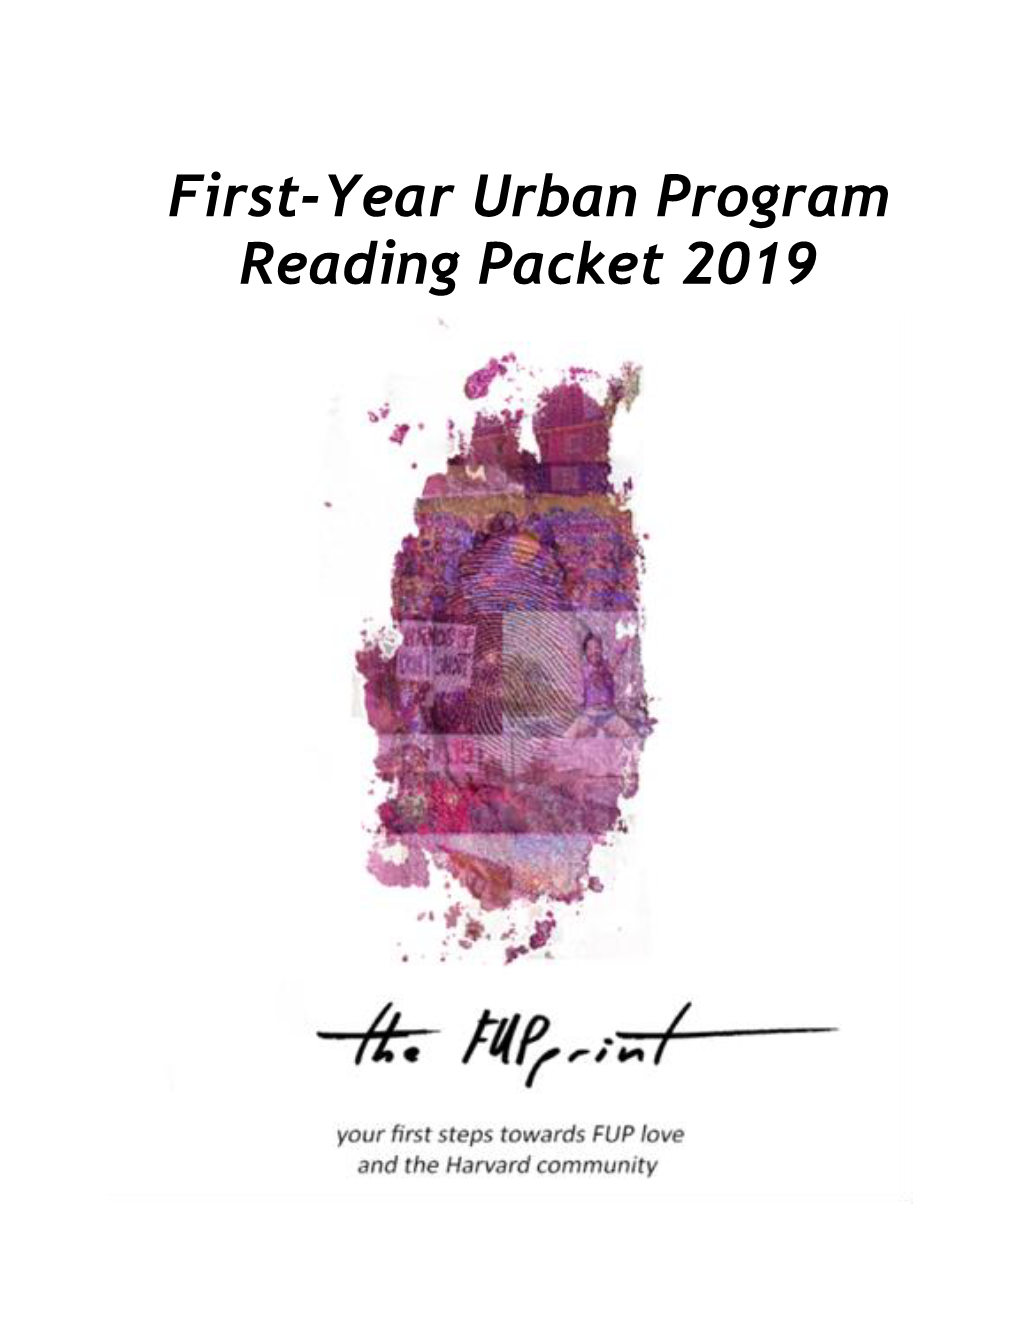 First-Year Urban Program Reading Packet 2019